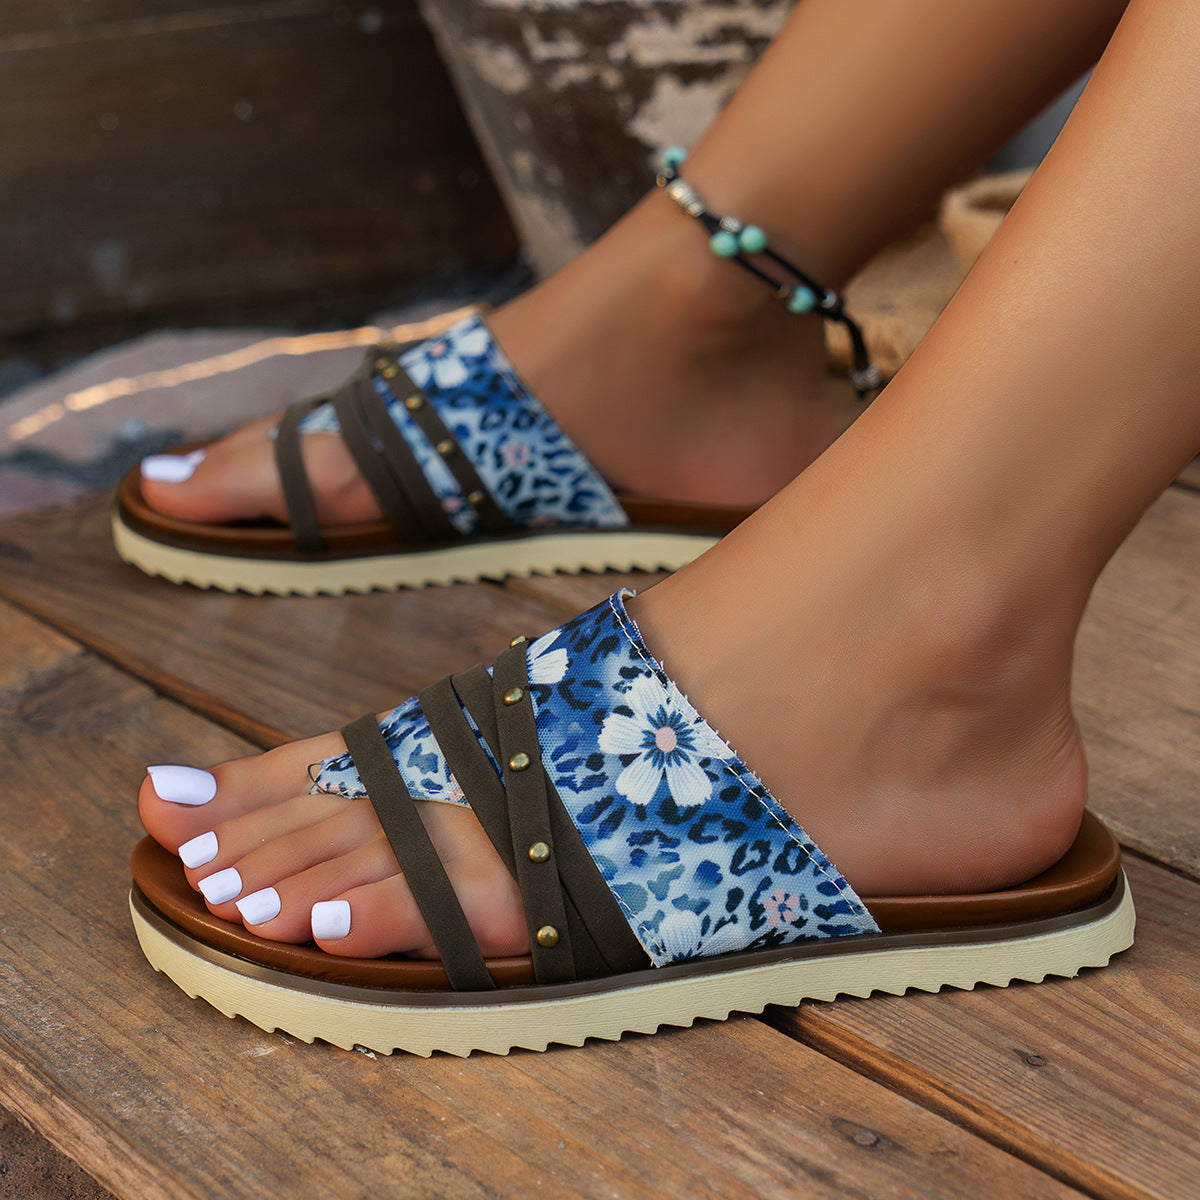 Leopard Print Beach Sandals Women's Casual Wish Fashion Roman Sandals